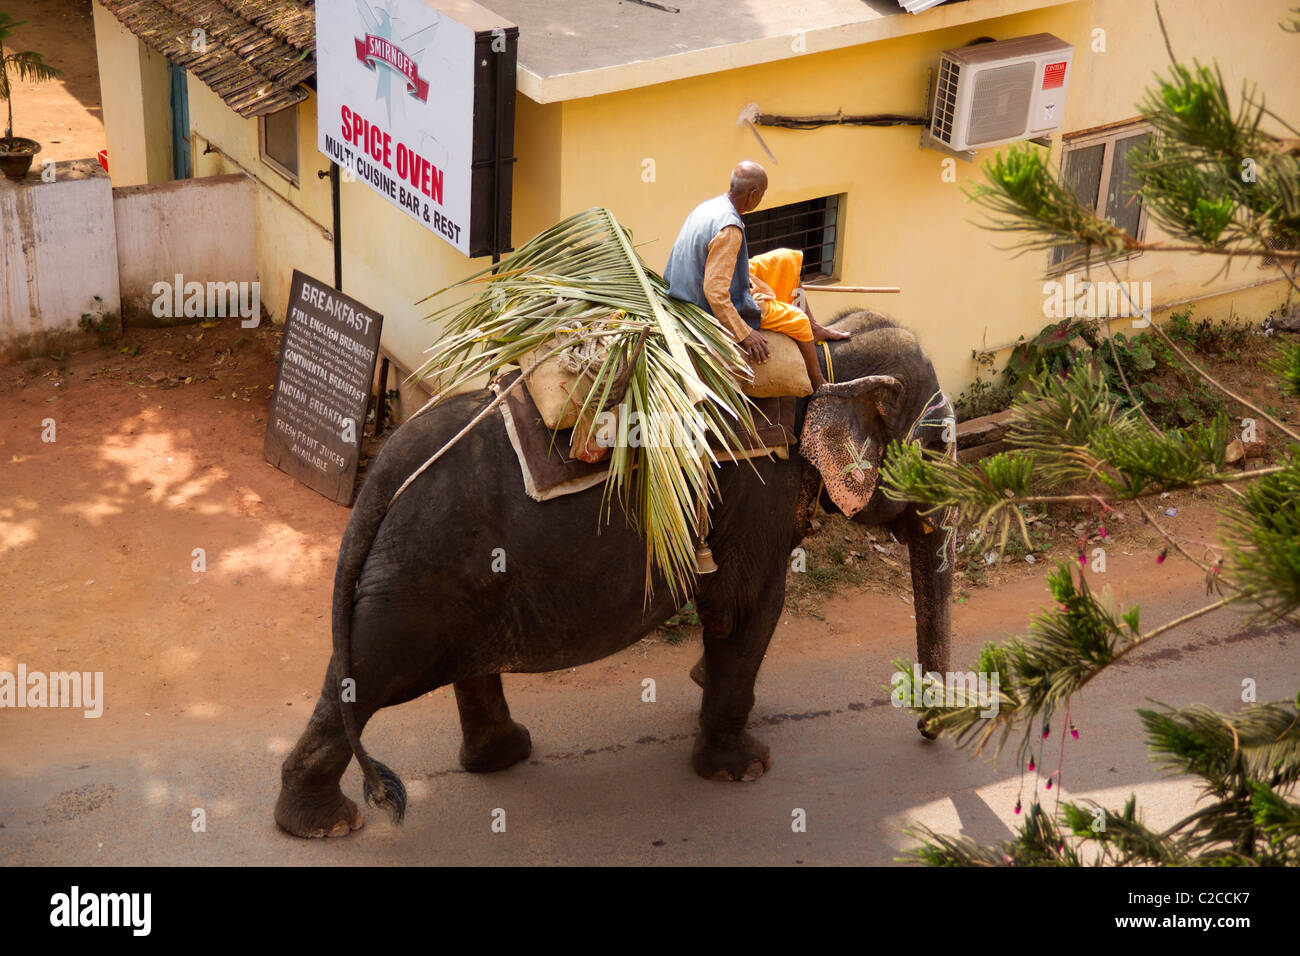 A working elephant in Arpora, Goa India. Stock Photo